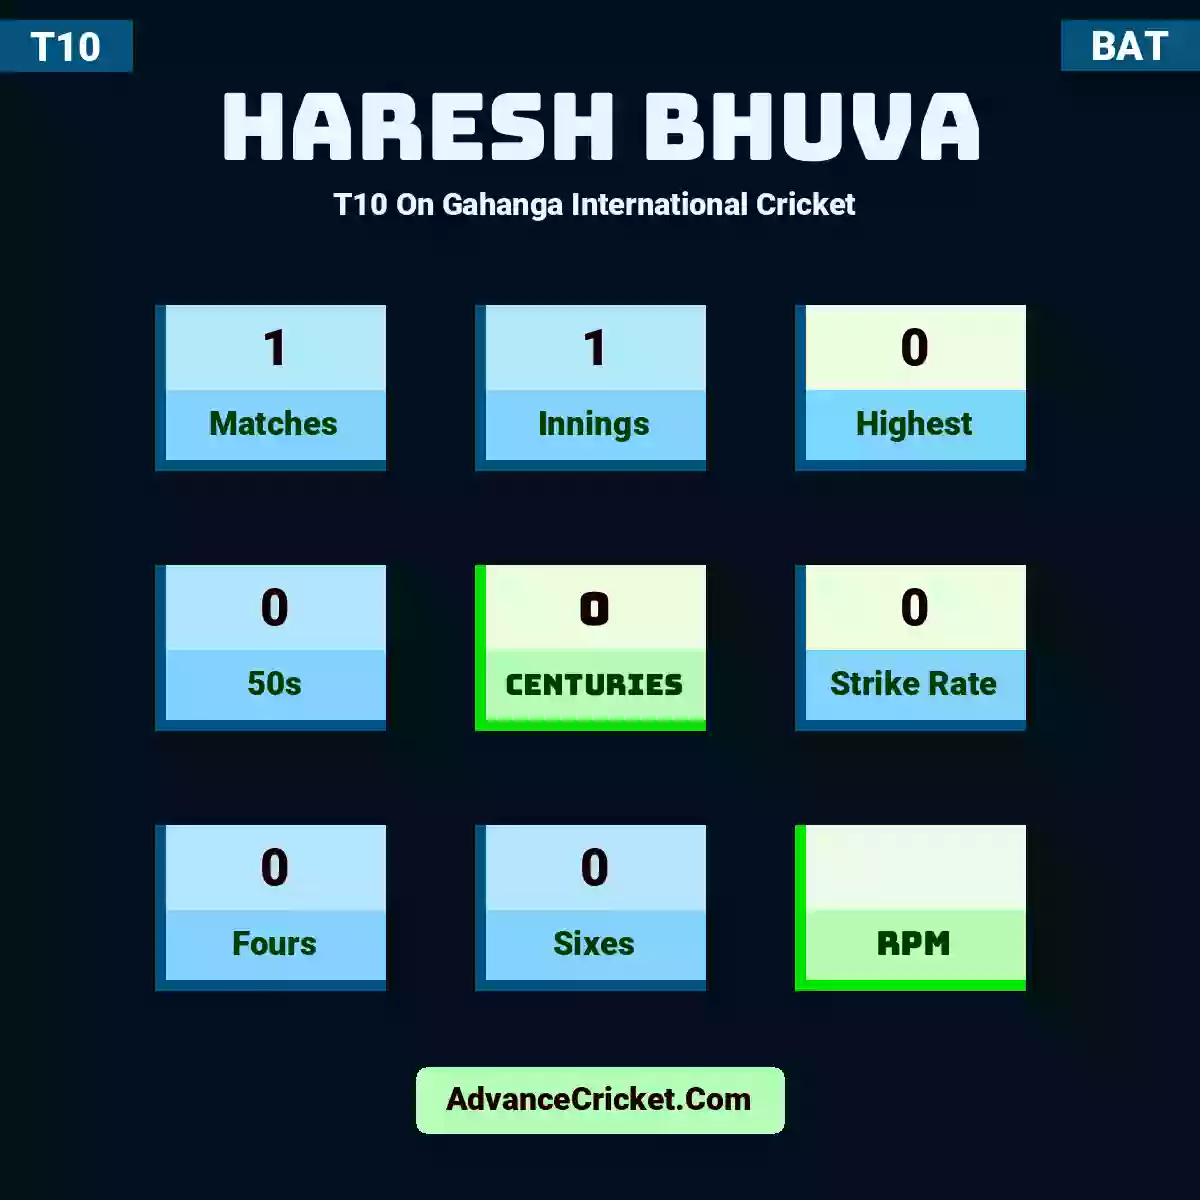 Haresh Bhuva T10  On Gahanga International Cricket , Haresh Bhuva played 1 matches, scored 0 runs as highest, 0 half-centuries, and 0 centuries, with a strike rate of 0. H.Bhuva hit 0 fours and 0 sixes.